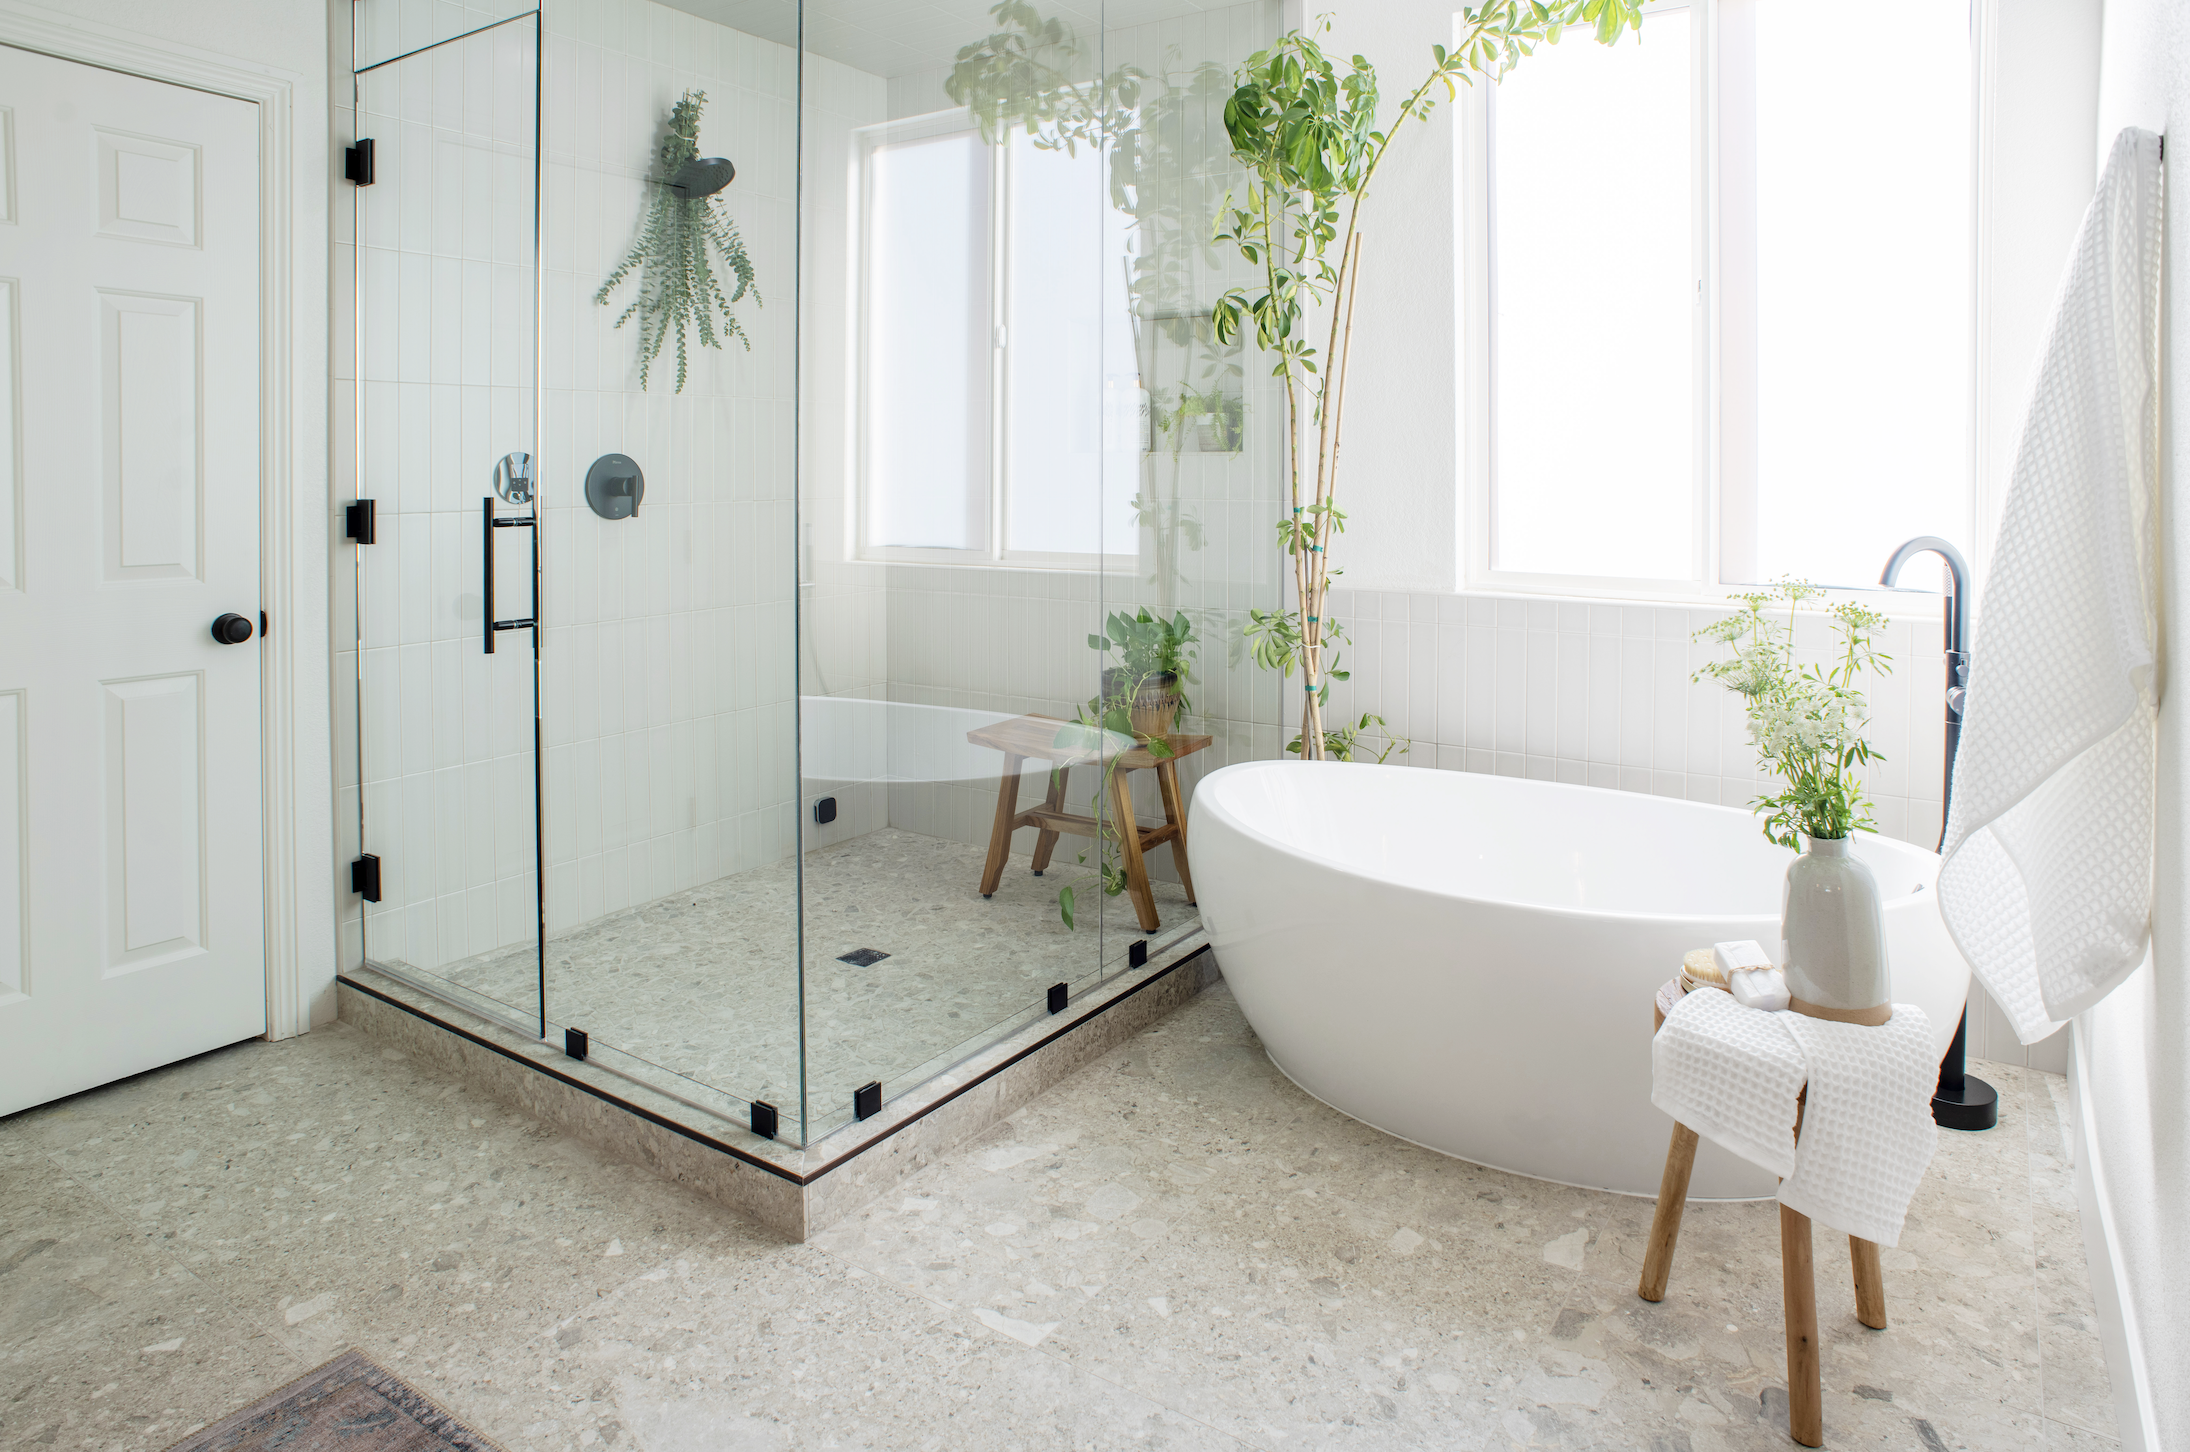 24 Stunning Walk In Shower Ideas Design Pictures - Bathroom Ideas With Shower And Bathtub